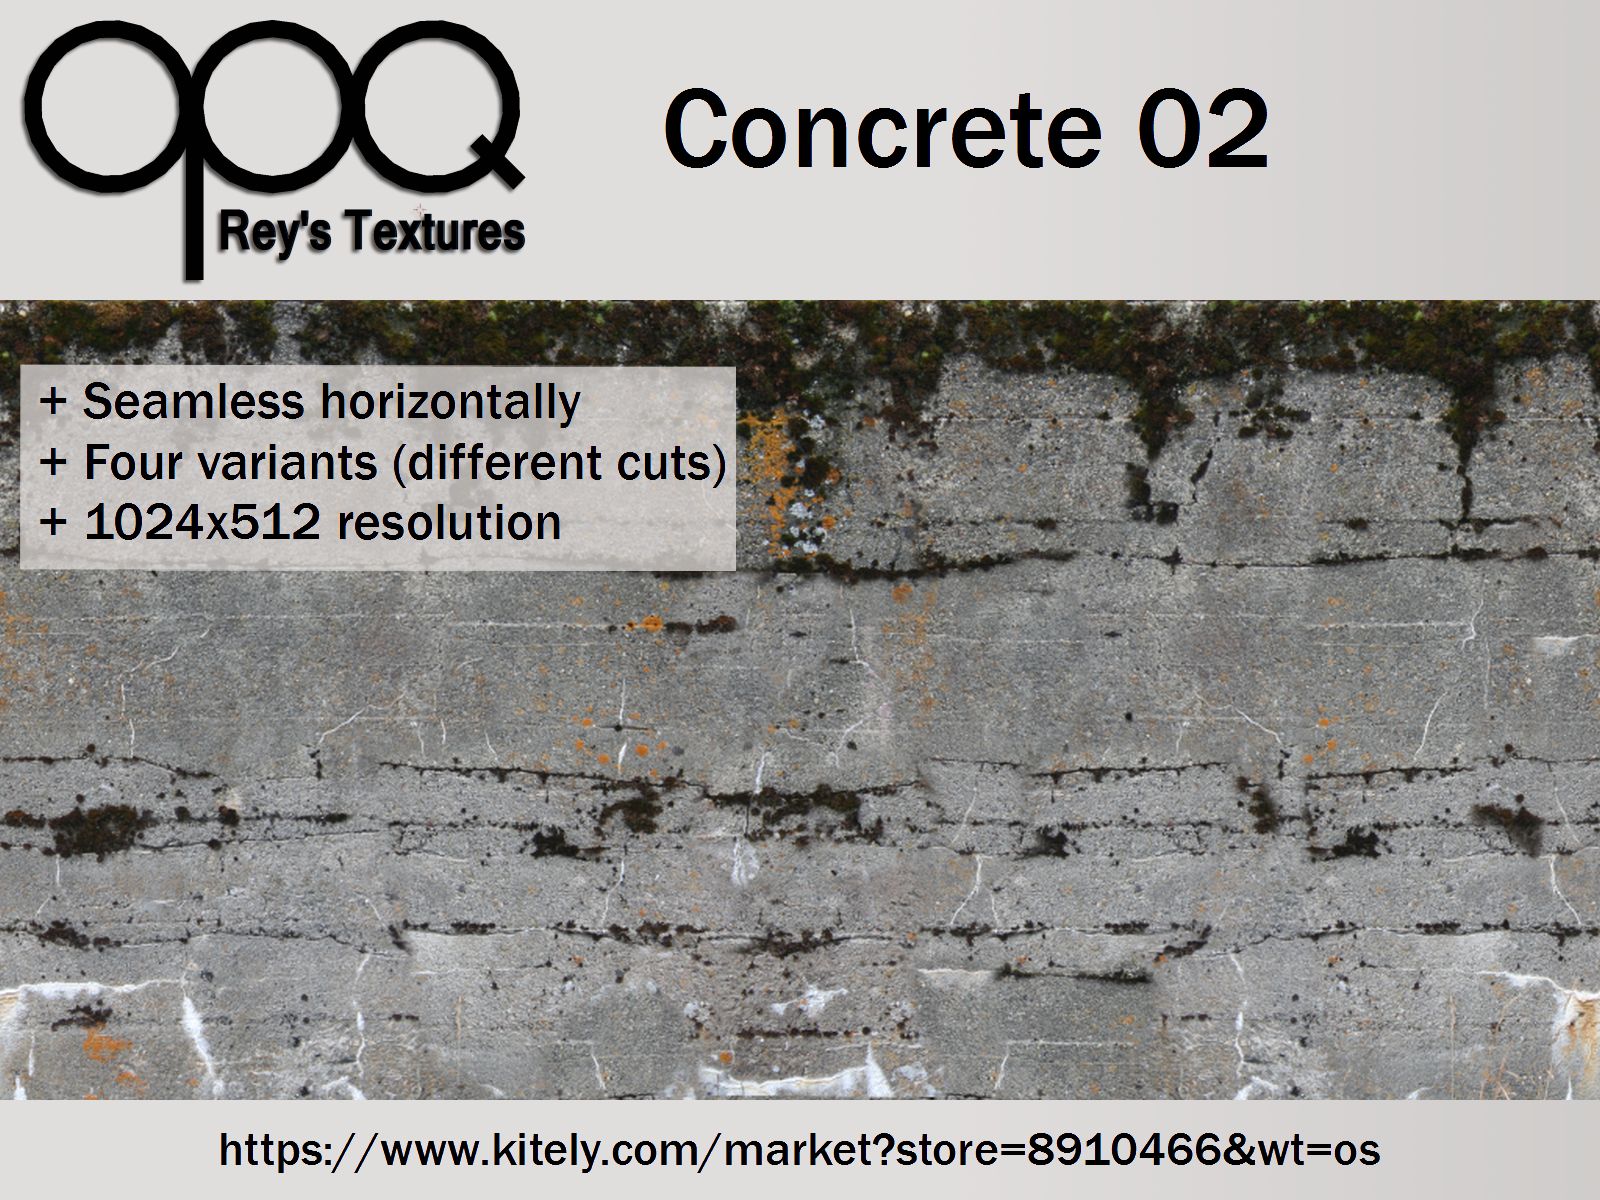 Rey's Concrete 02 Poster Kitely.jpg